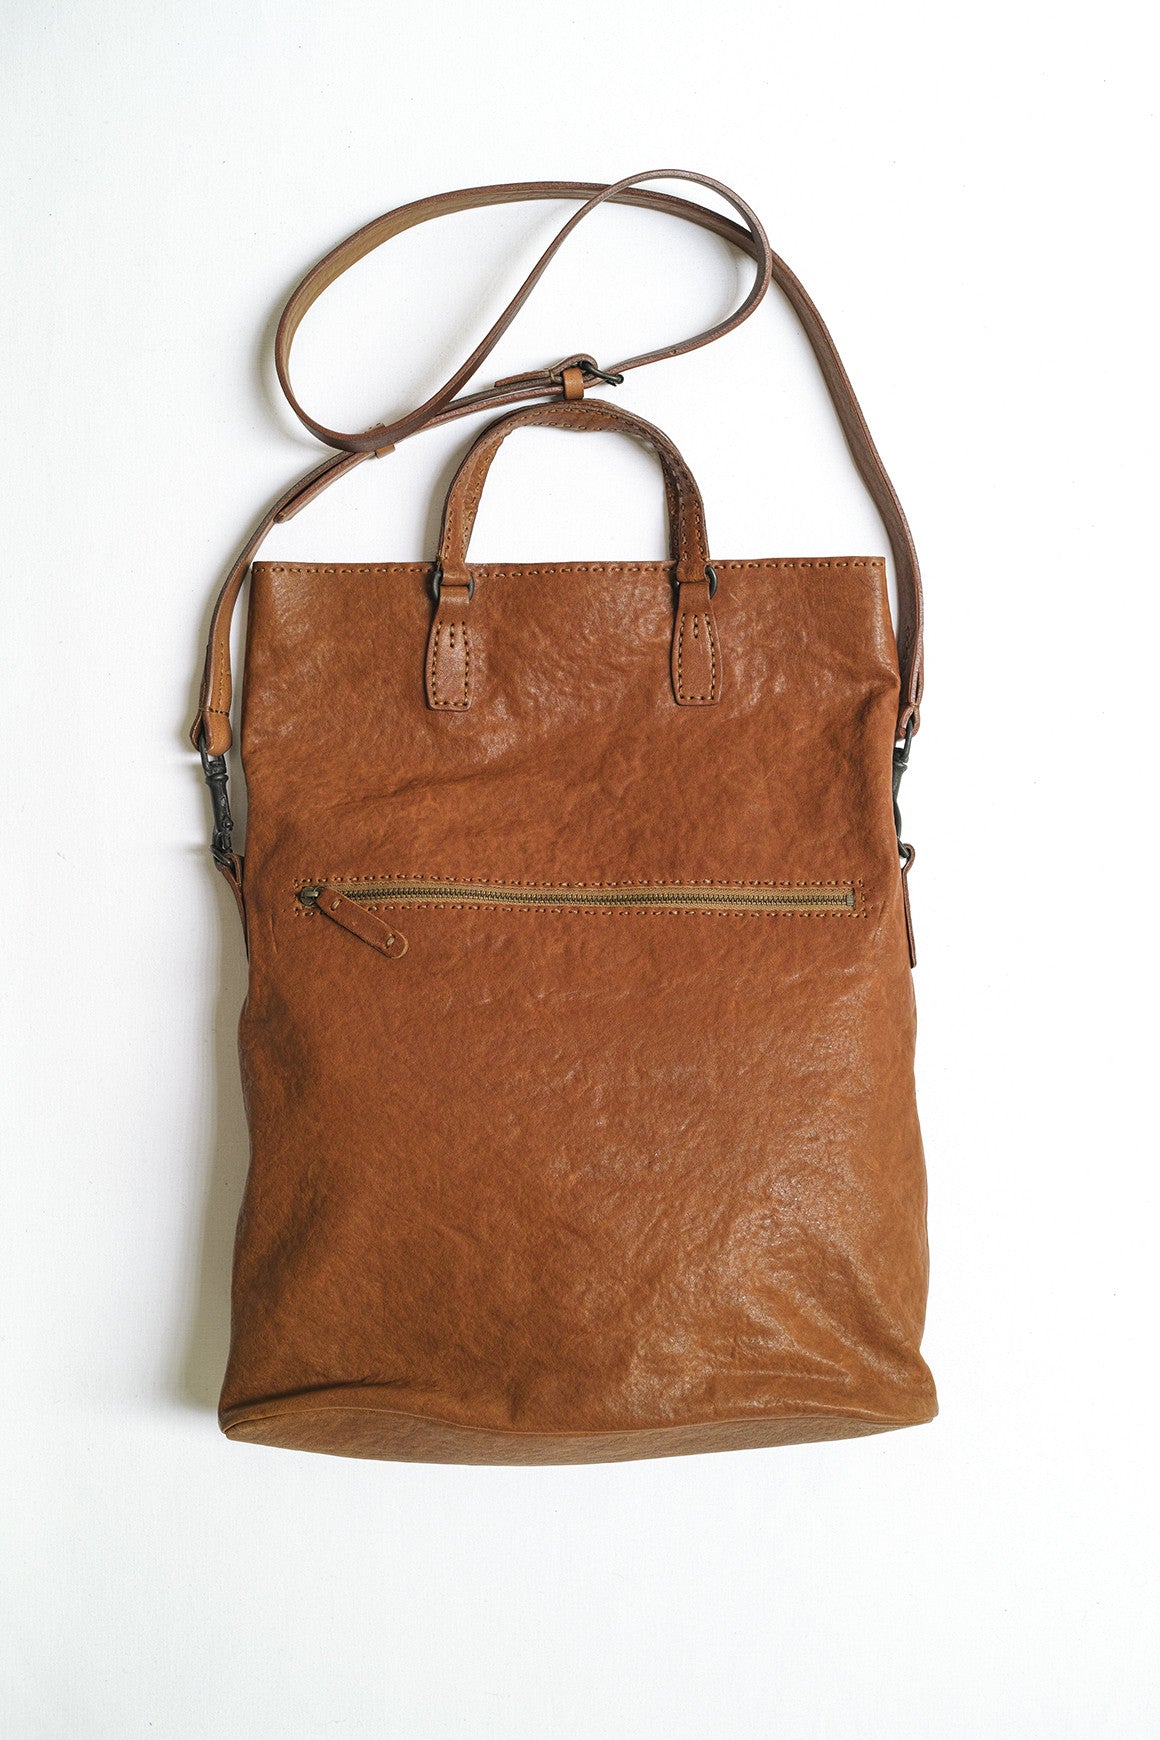 Malta Leather Bag – Johnny Farah